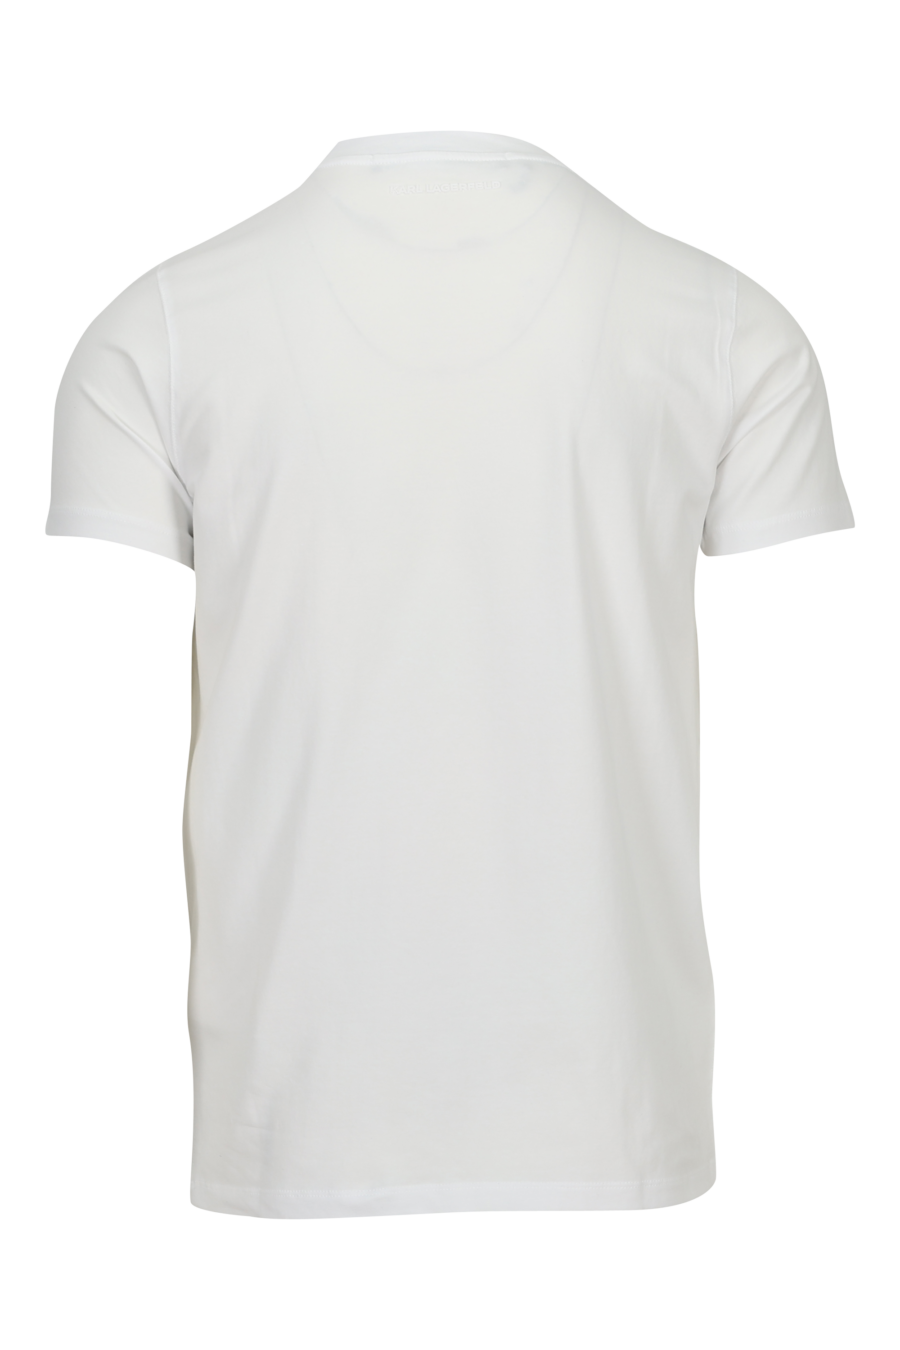 Camiseta blanca con maxilogo firma delineado "rue st guillaume" - 4062226958530 1